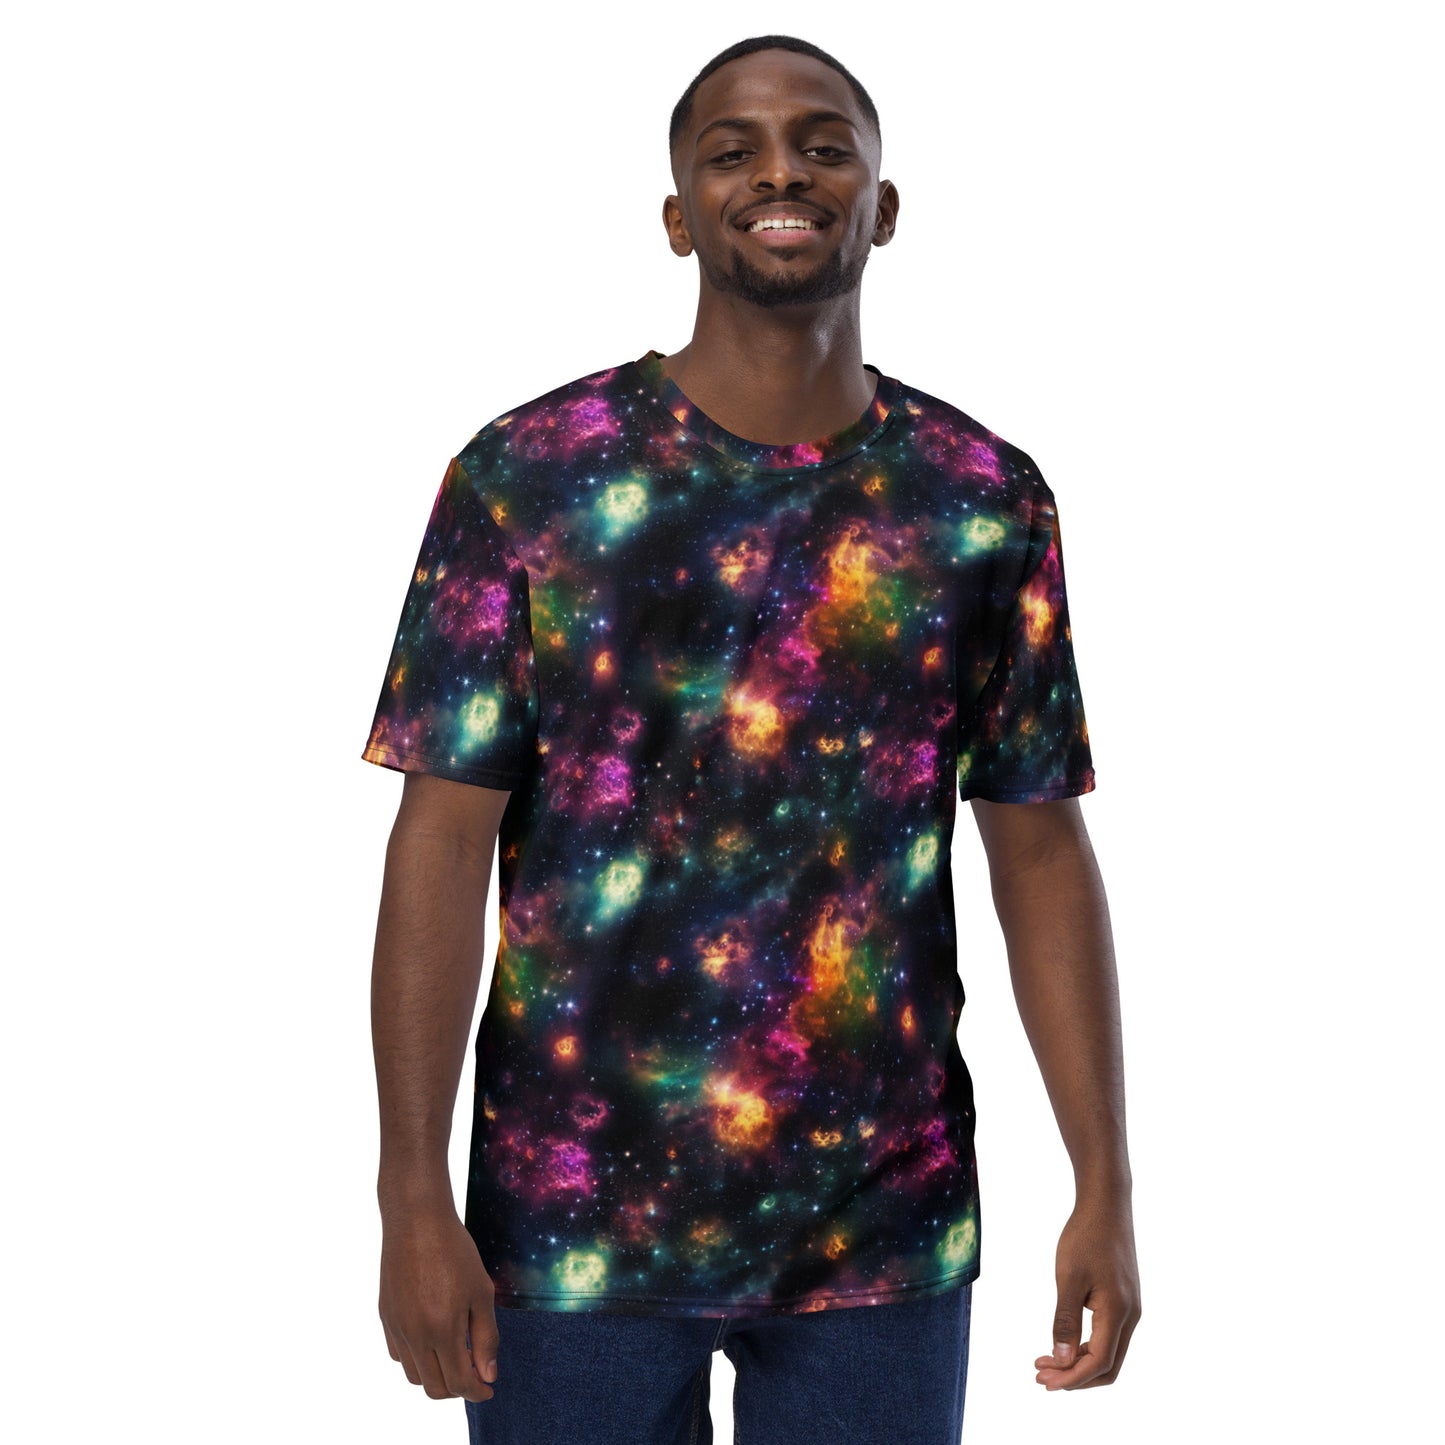 Cosmic Nebulas Men's T-Shirt